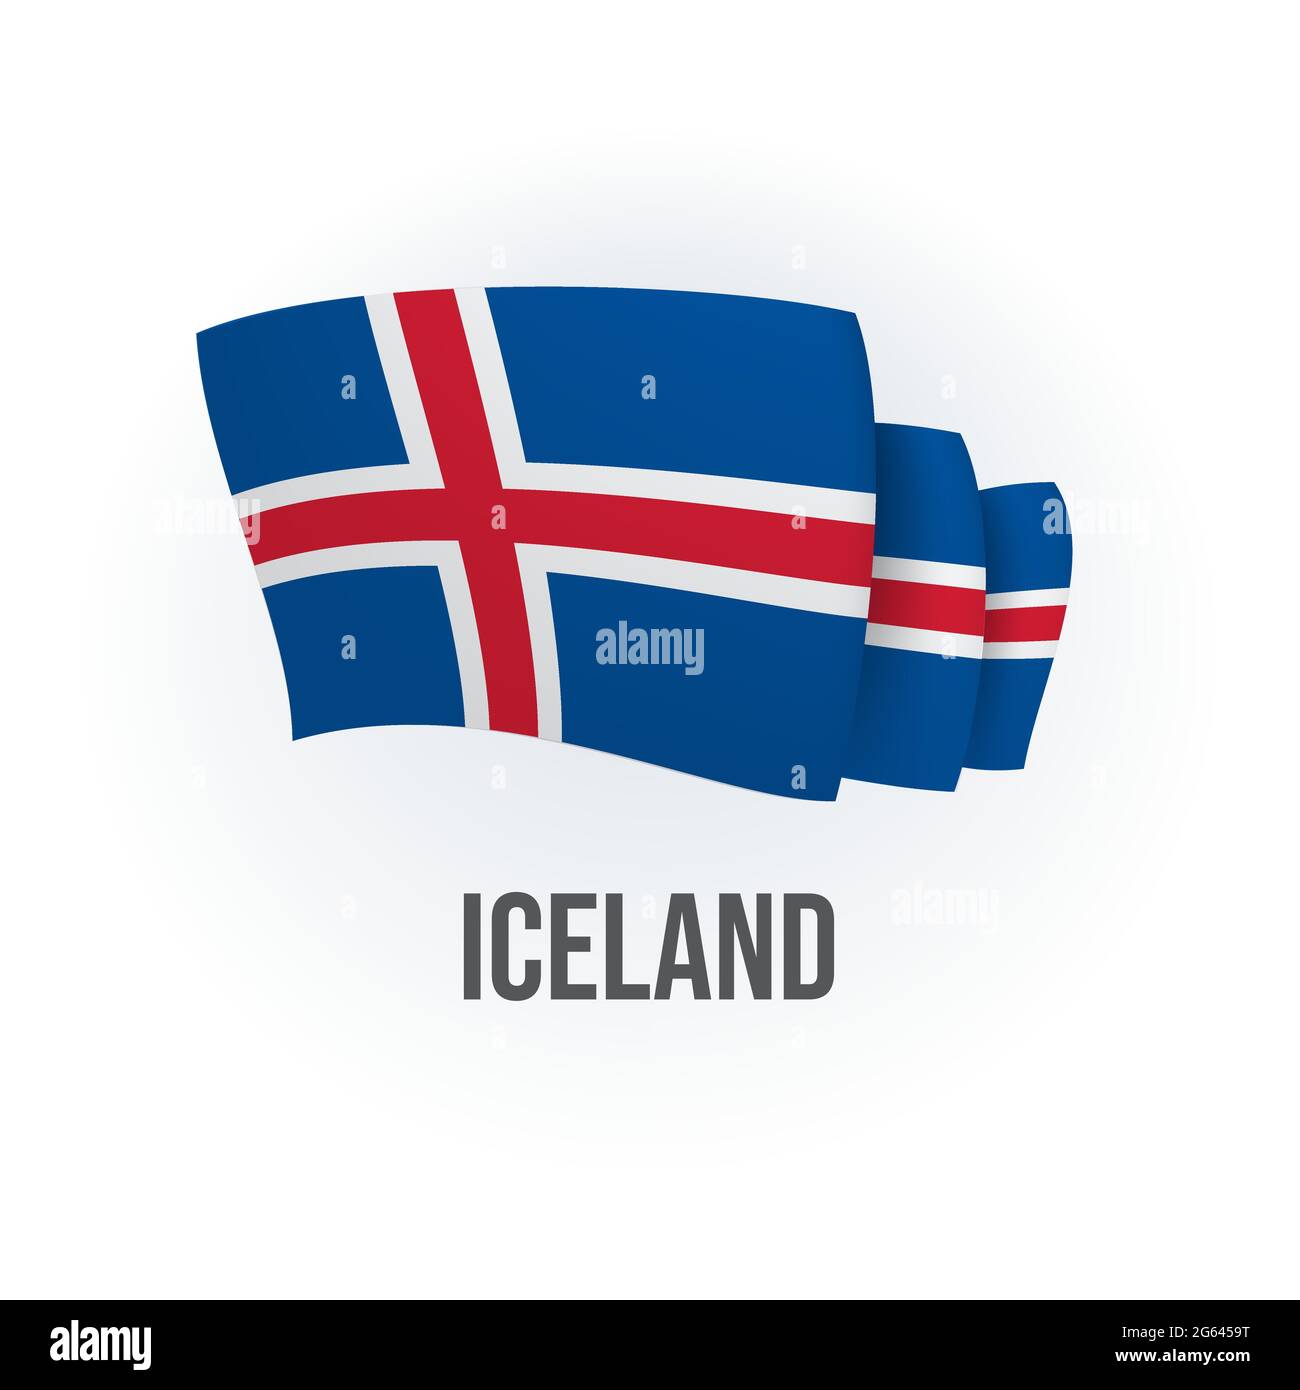 Drapeau vectoriel de l'Islande. L'Islande signe le drapeau. Illustration vectorielle. Illustration de Vecteur